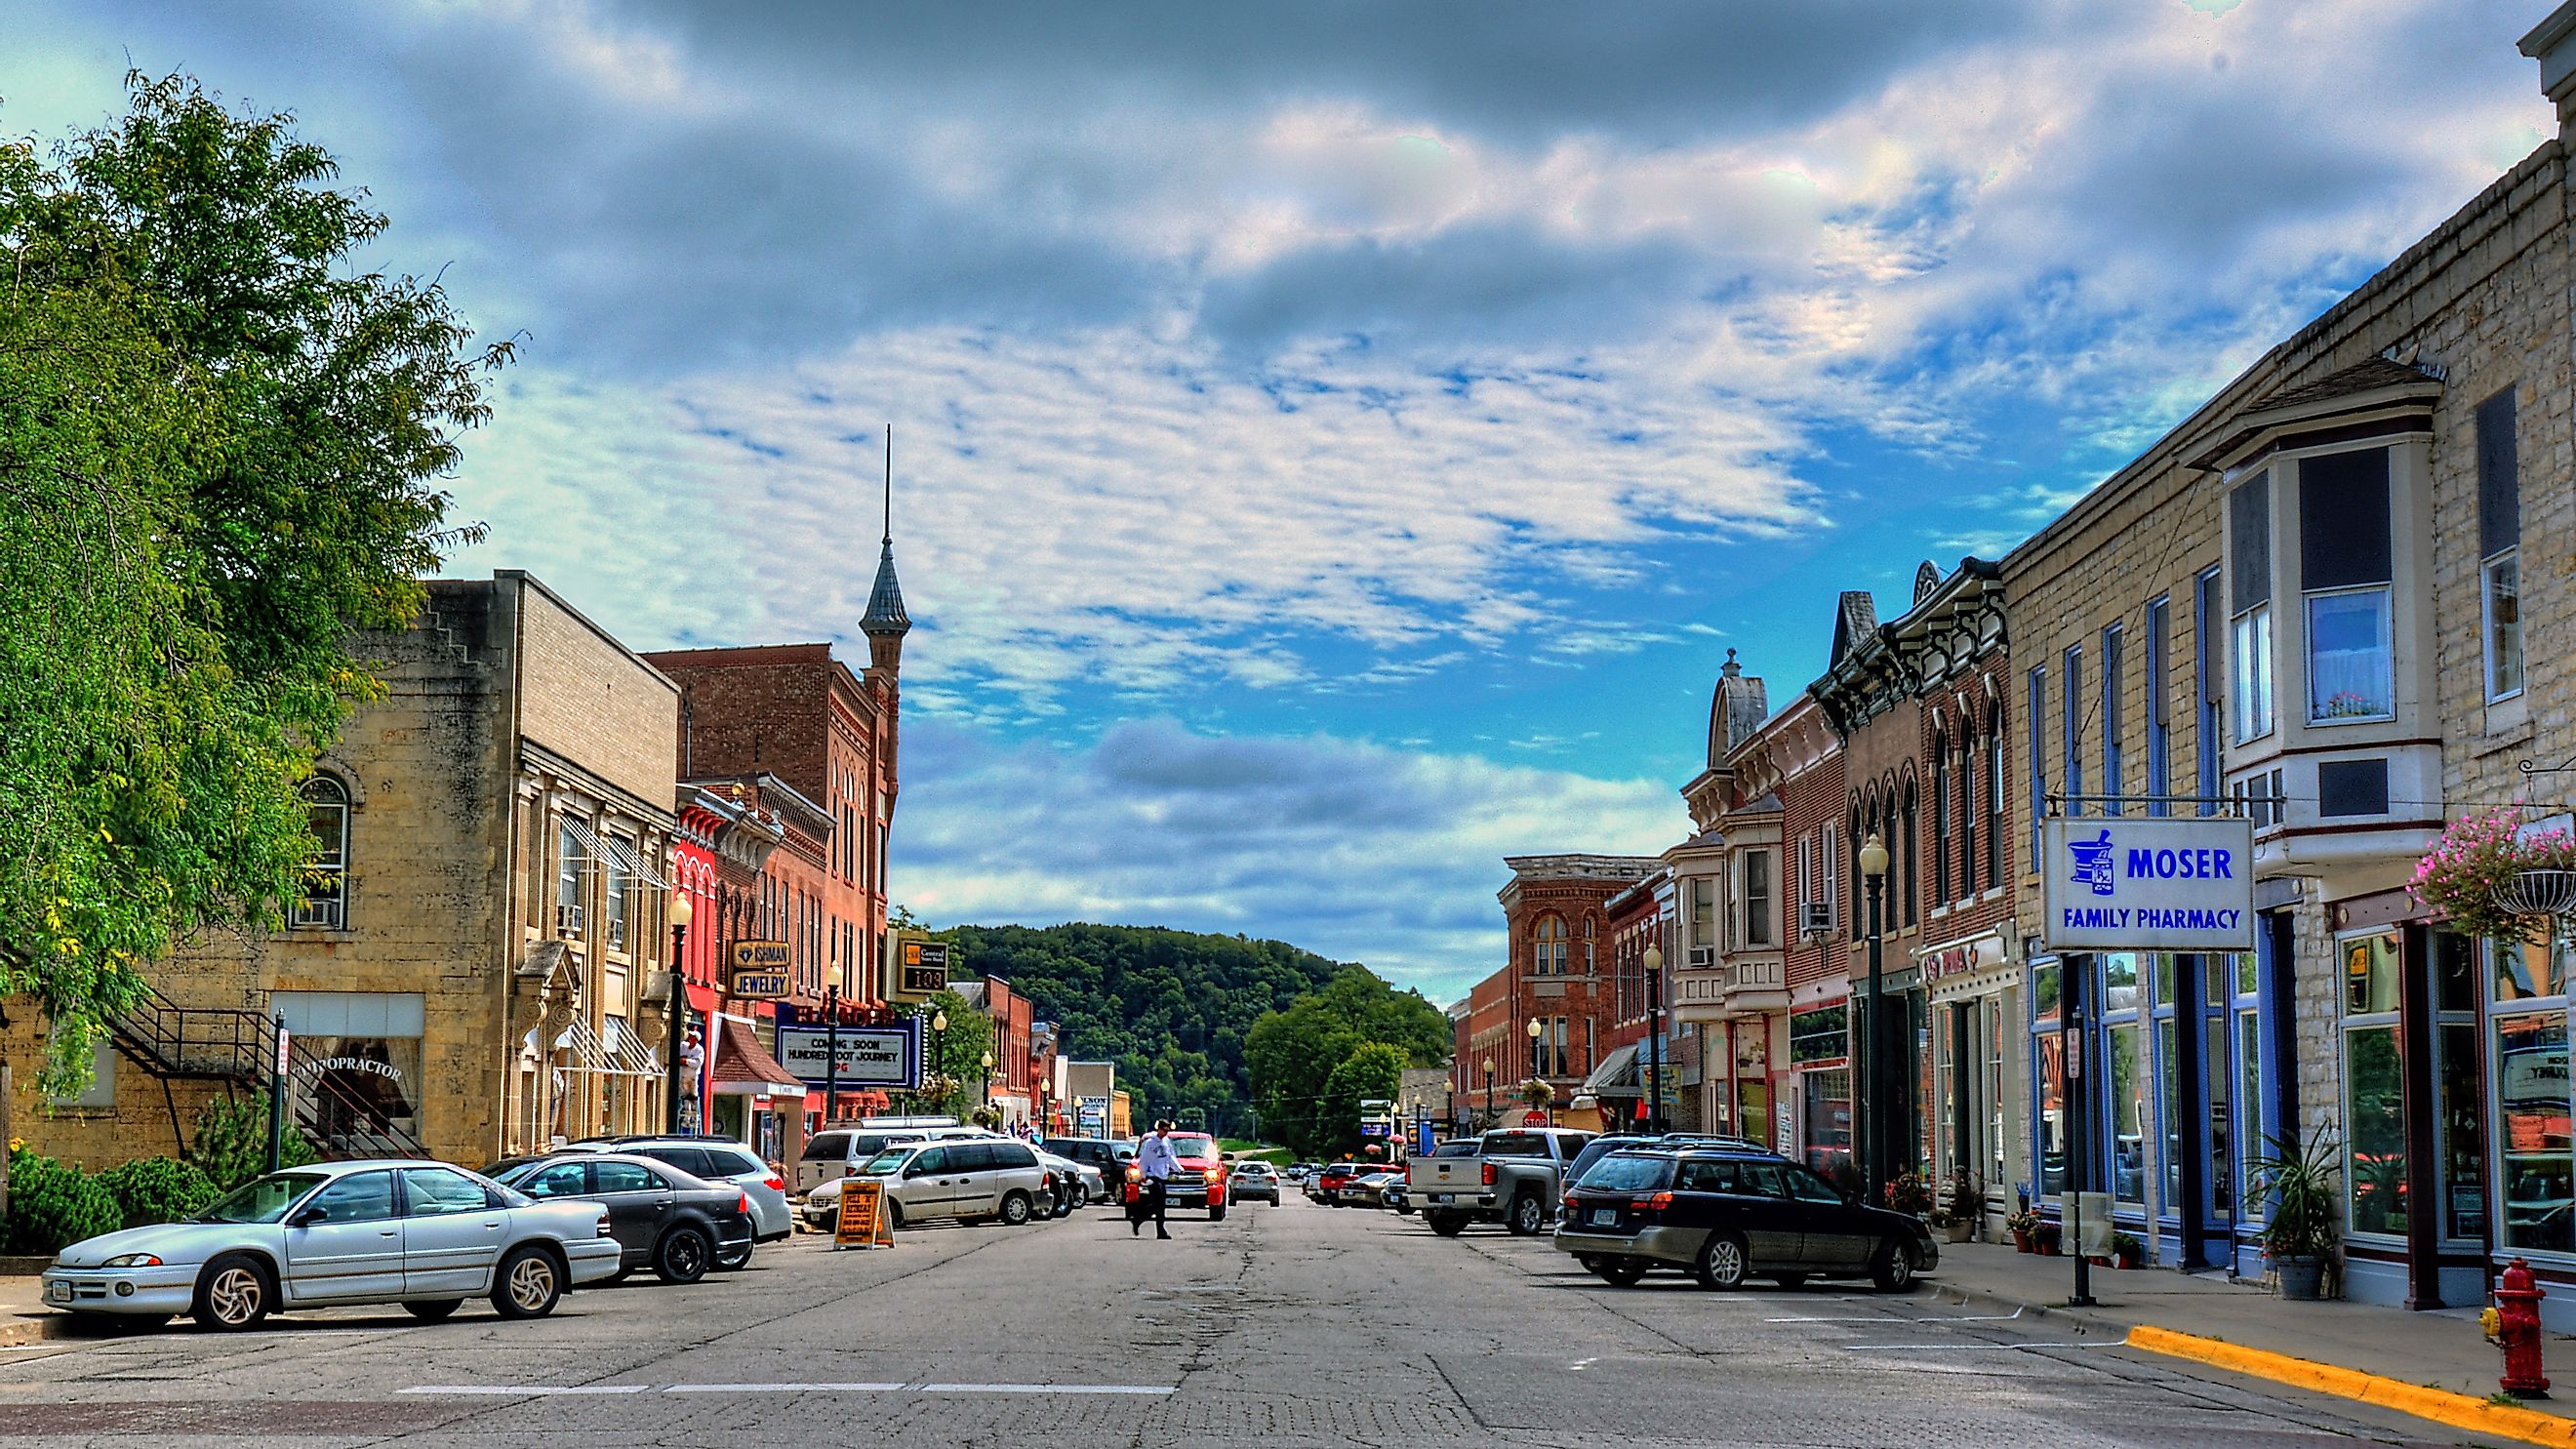 Downtown Elkader, Iowa. Image credit: Kevin Schuchmann via Wikimedia Commons.